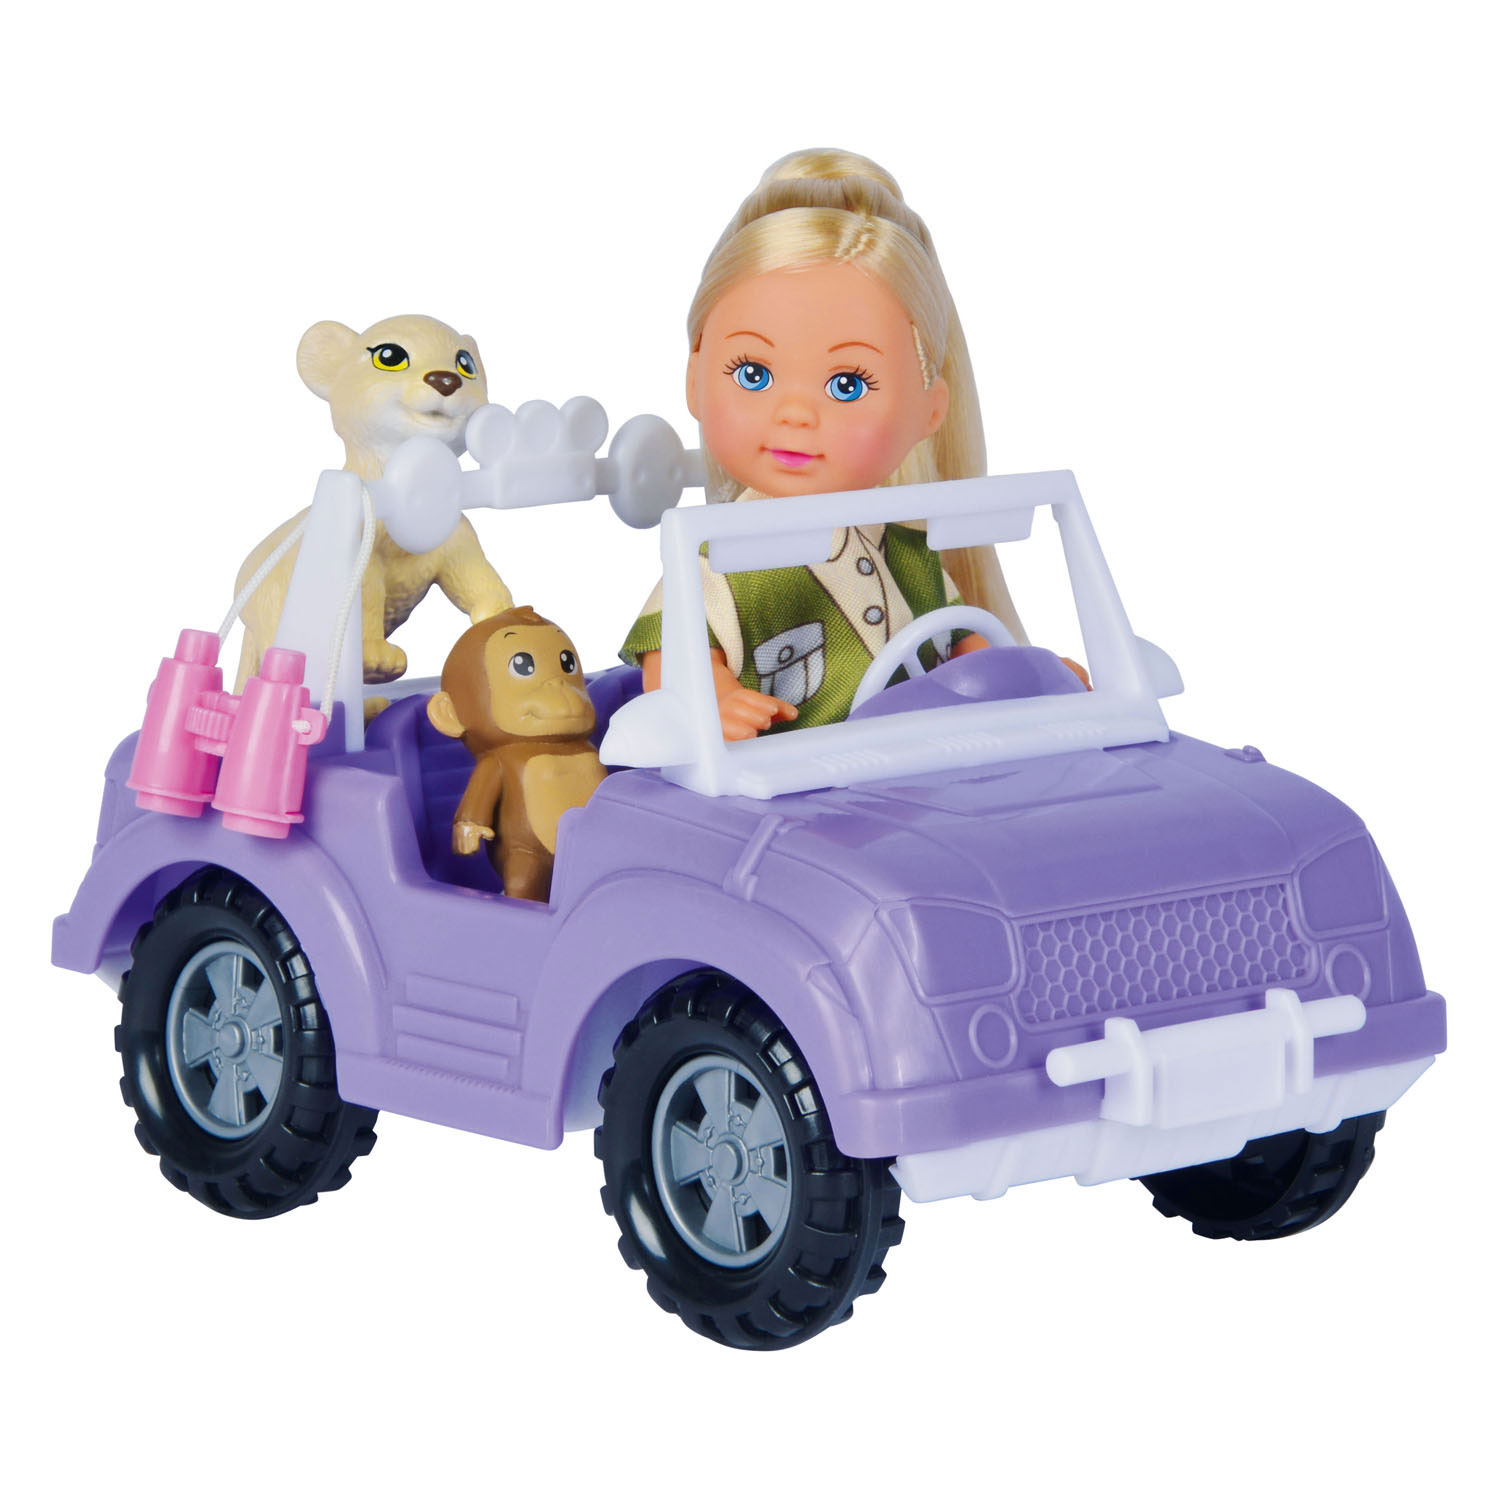 Evi Love Minipop Safari avec voiture